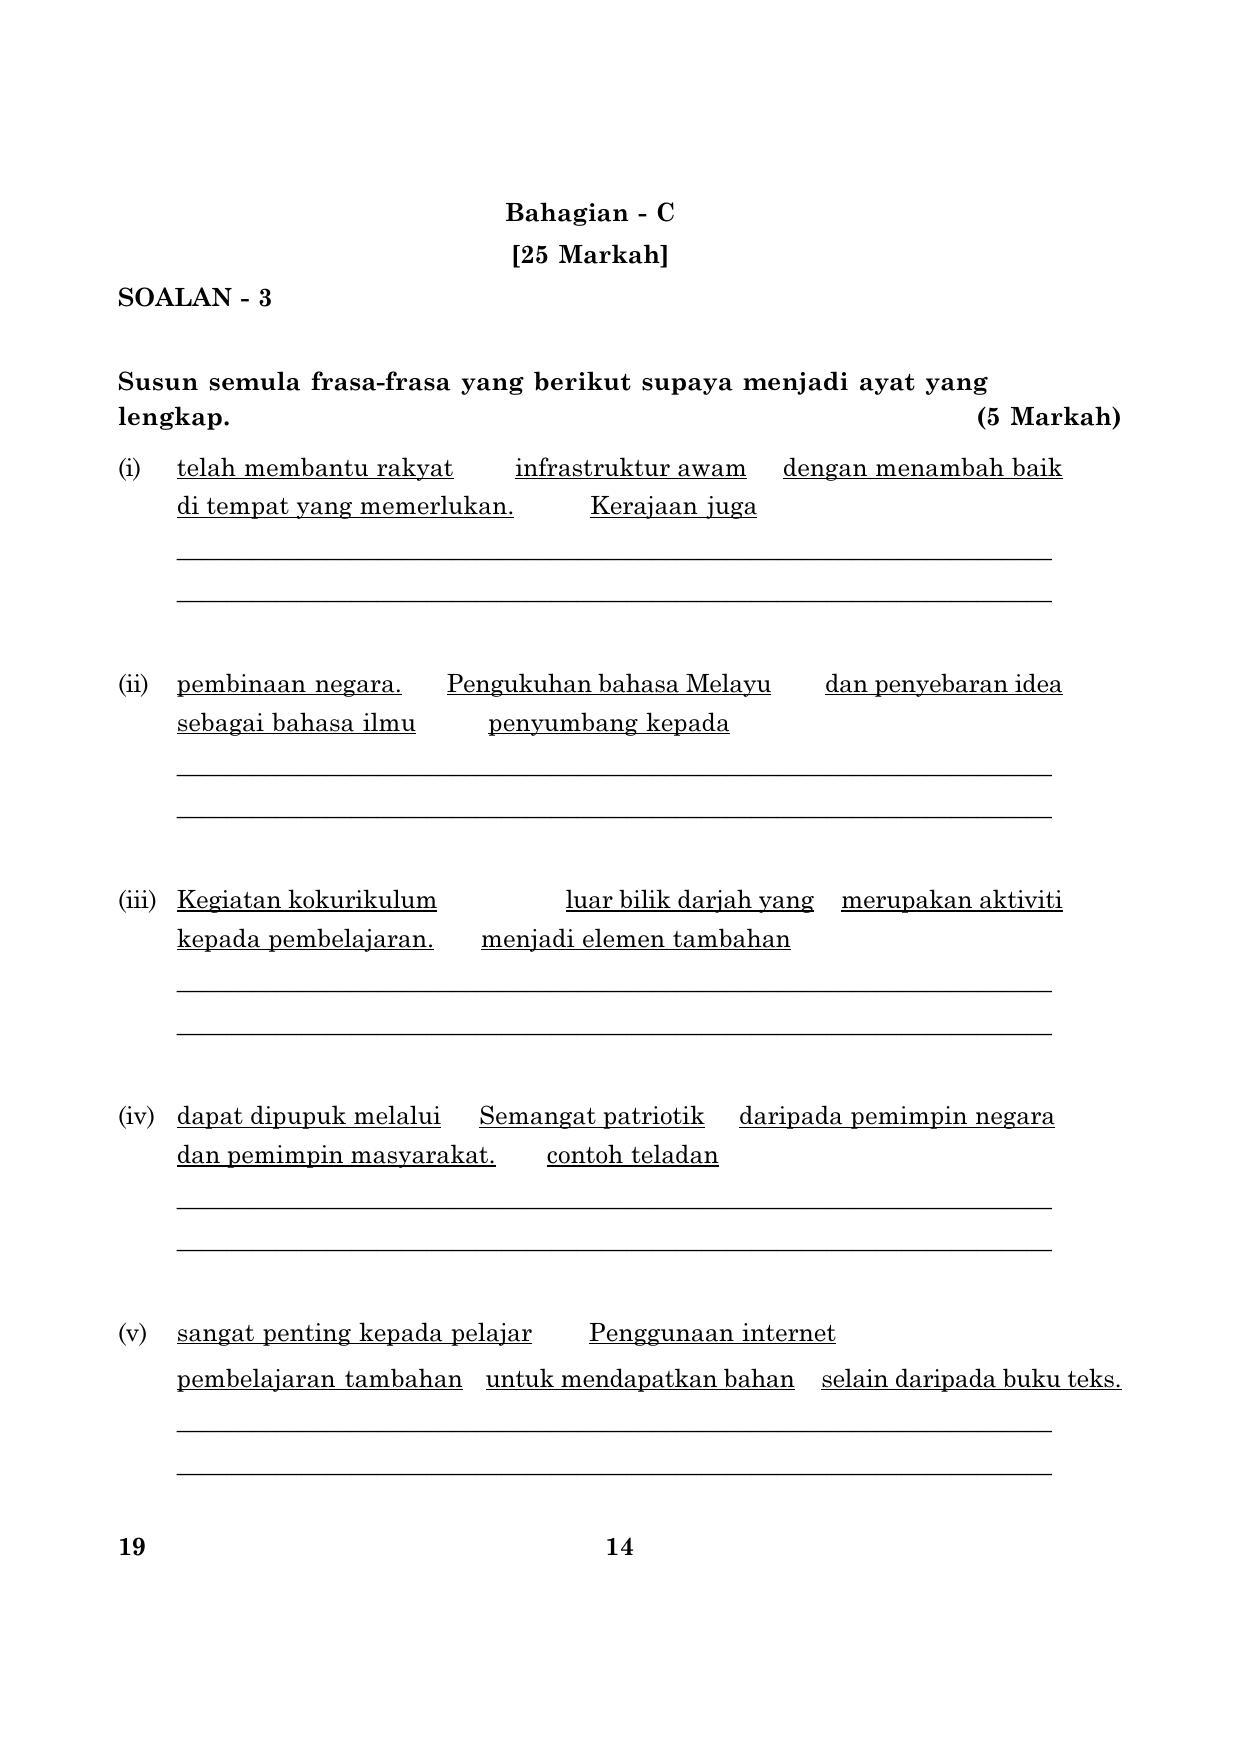 CBSE Class 10 019 Bahasamelayu English 2016 Question Paper - Page 14